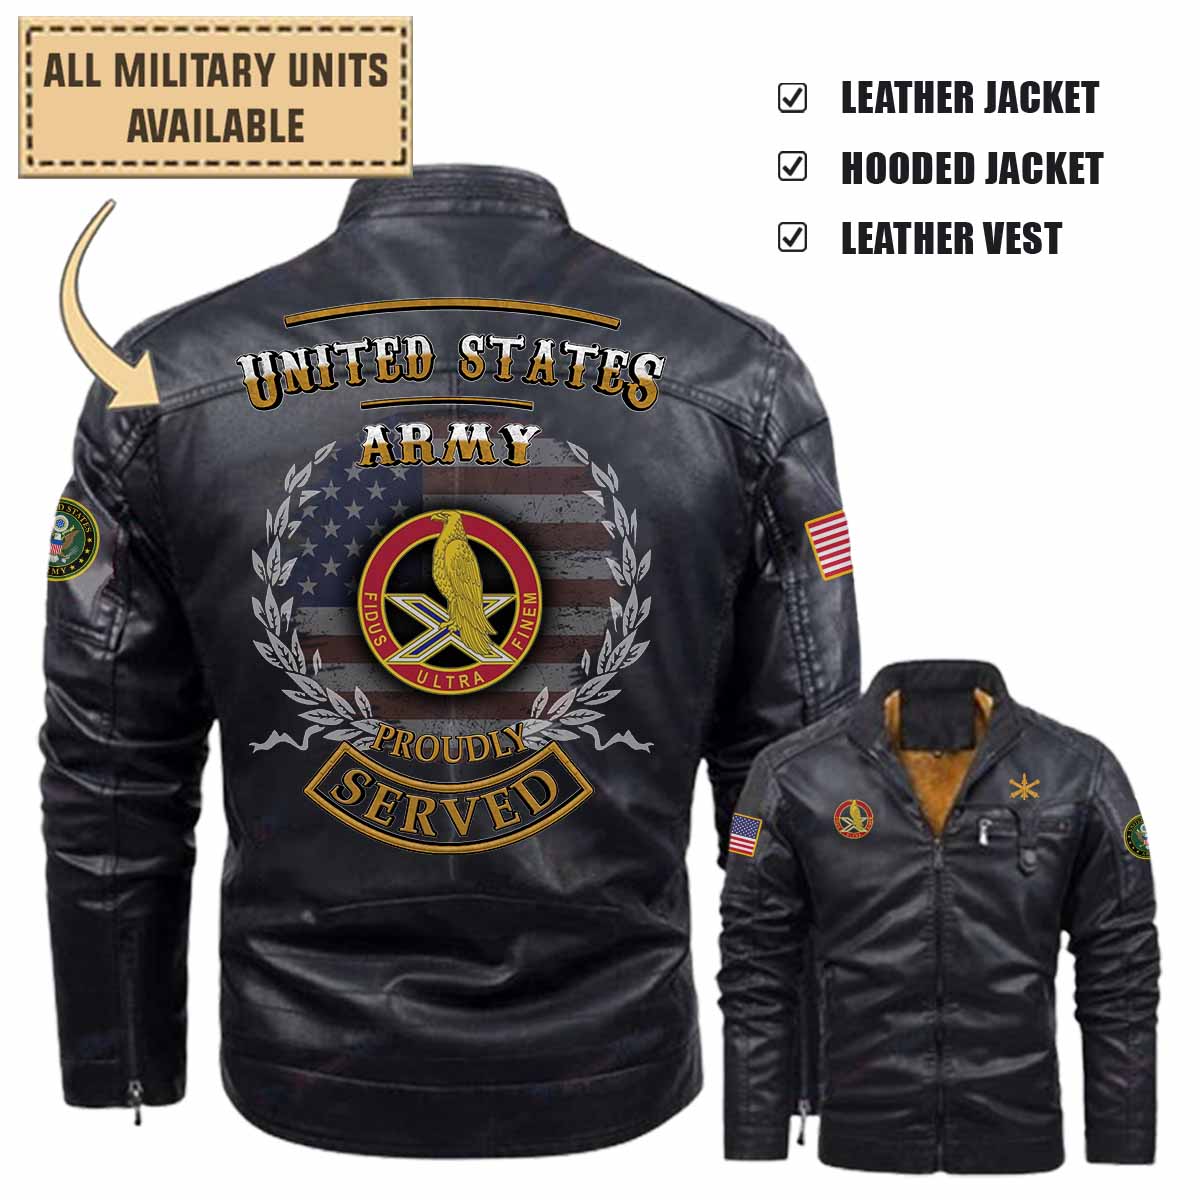 2-2 ADA 2nd Battalion 2nd Air Defense Artillery Regiment_Leather Jacket and Vest